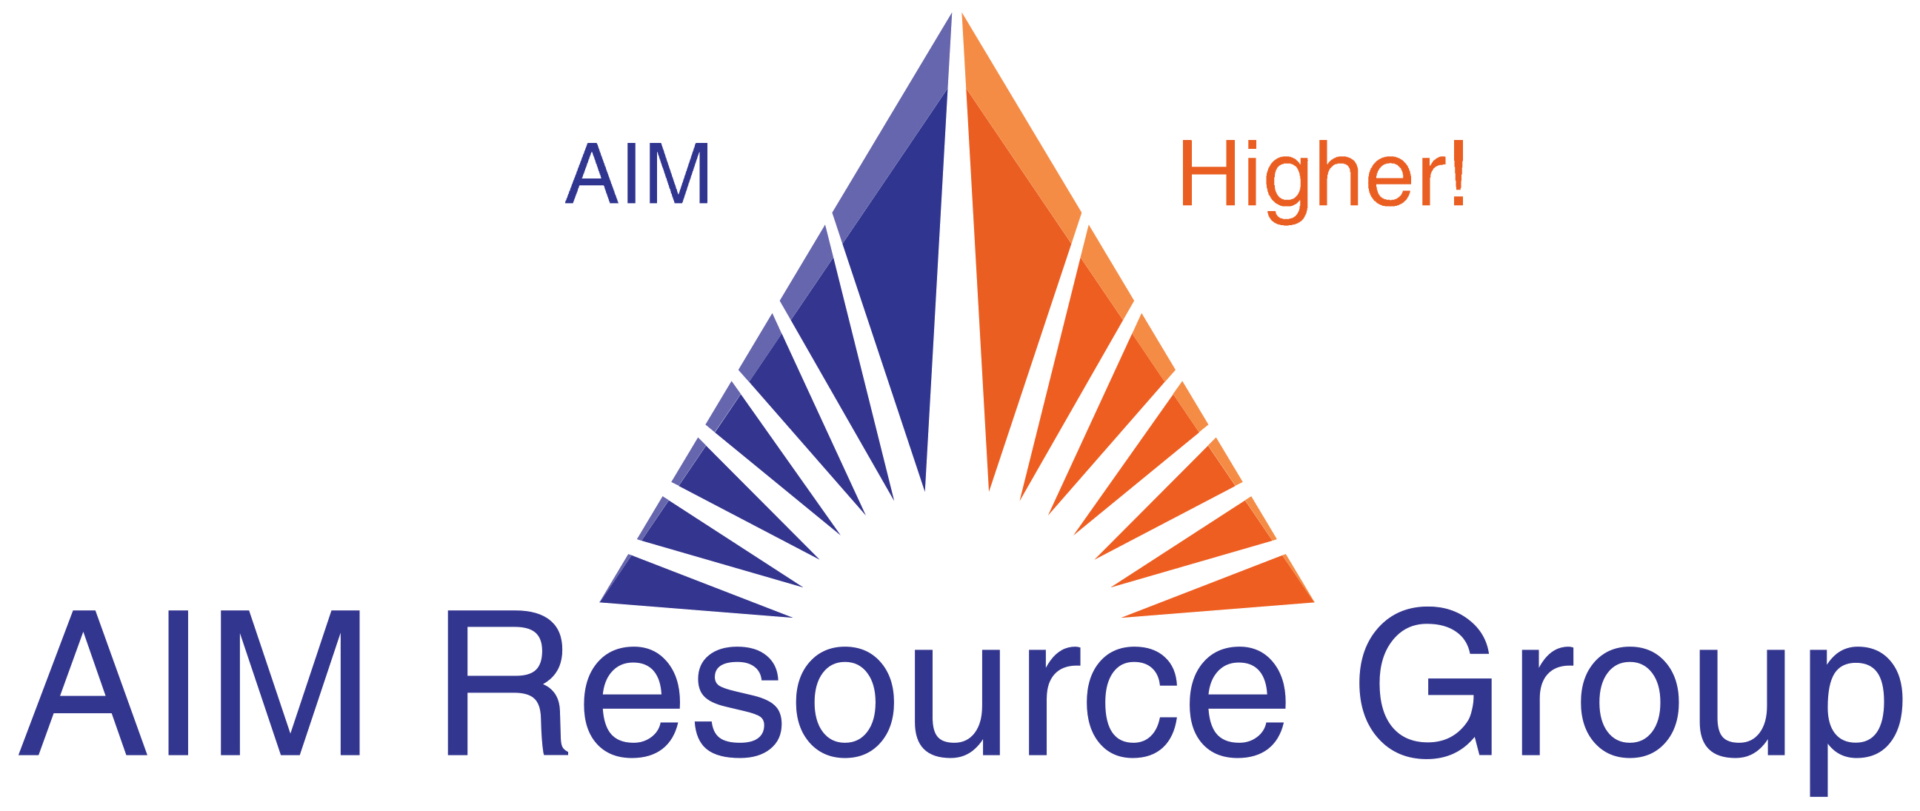 Aim Resource Group logo